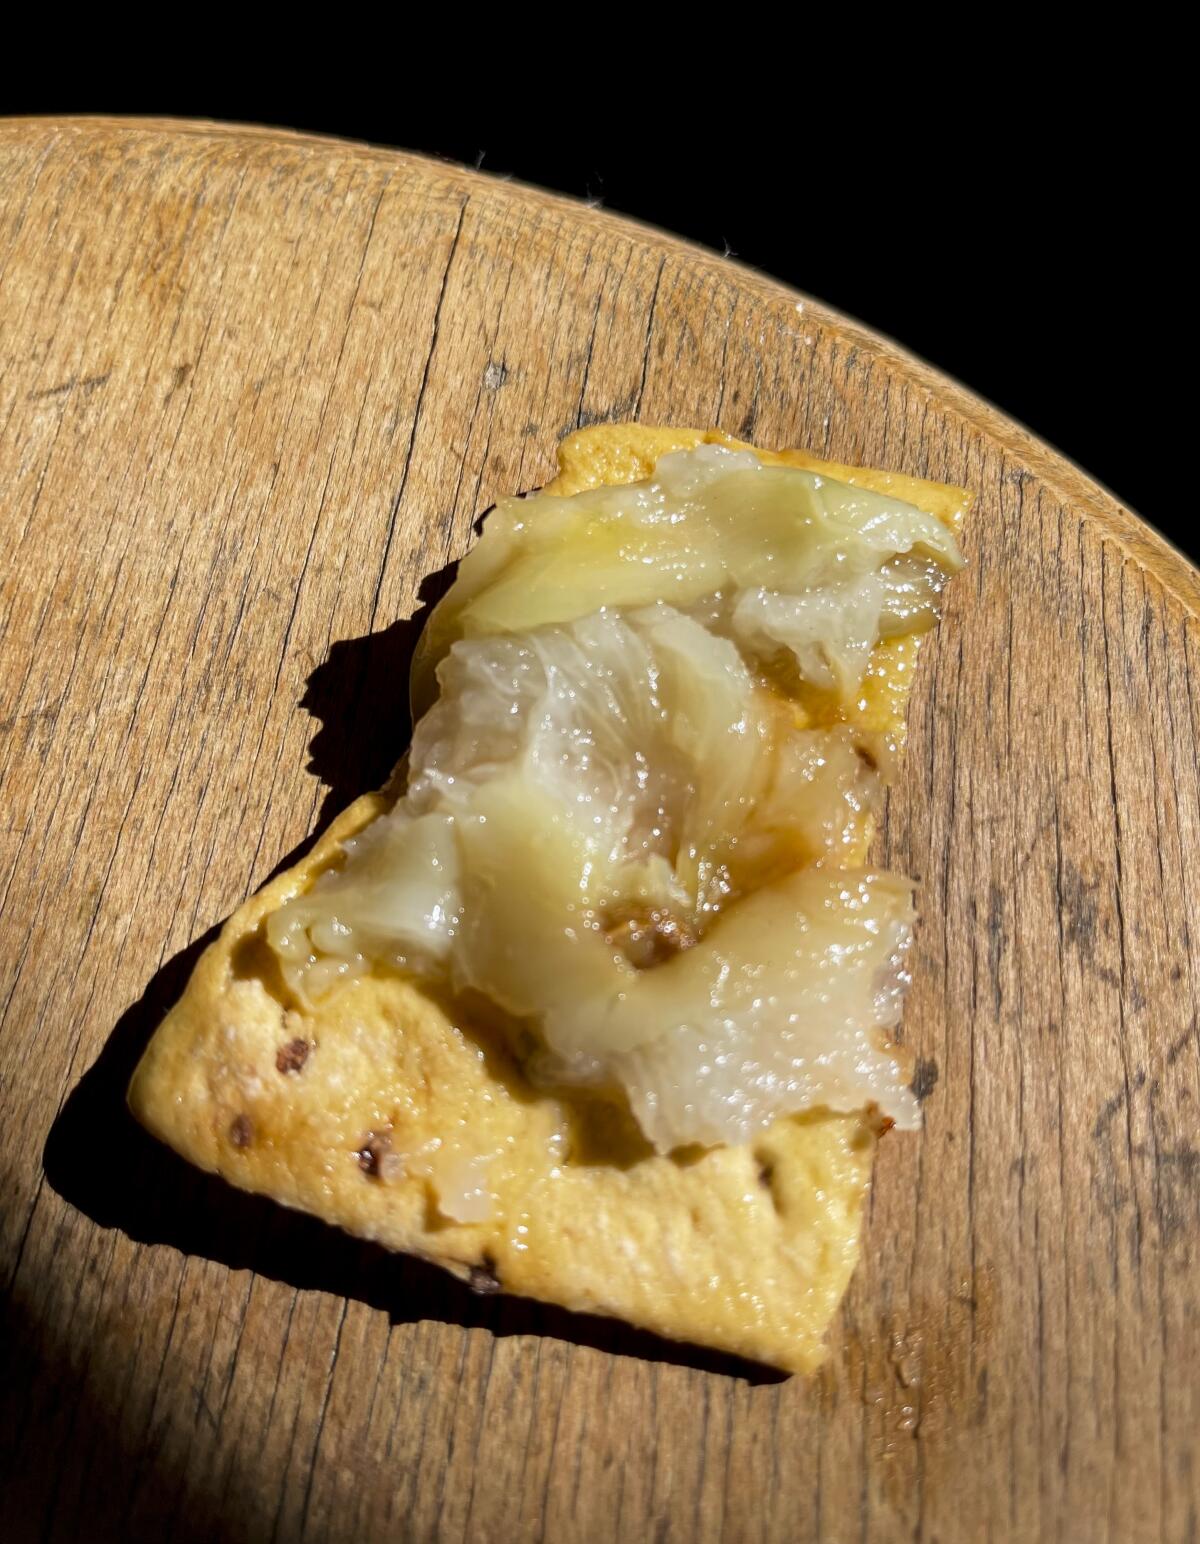 Closeup of a cracker spreaded with soft garlic.